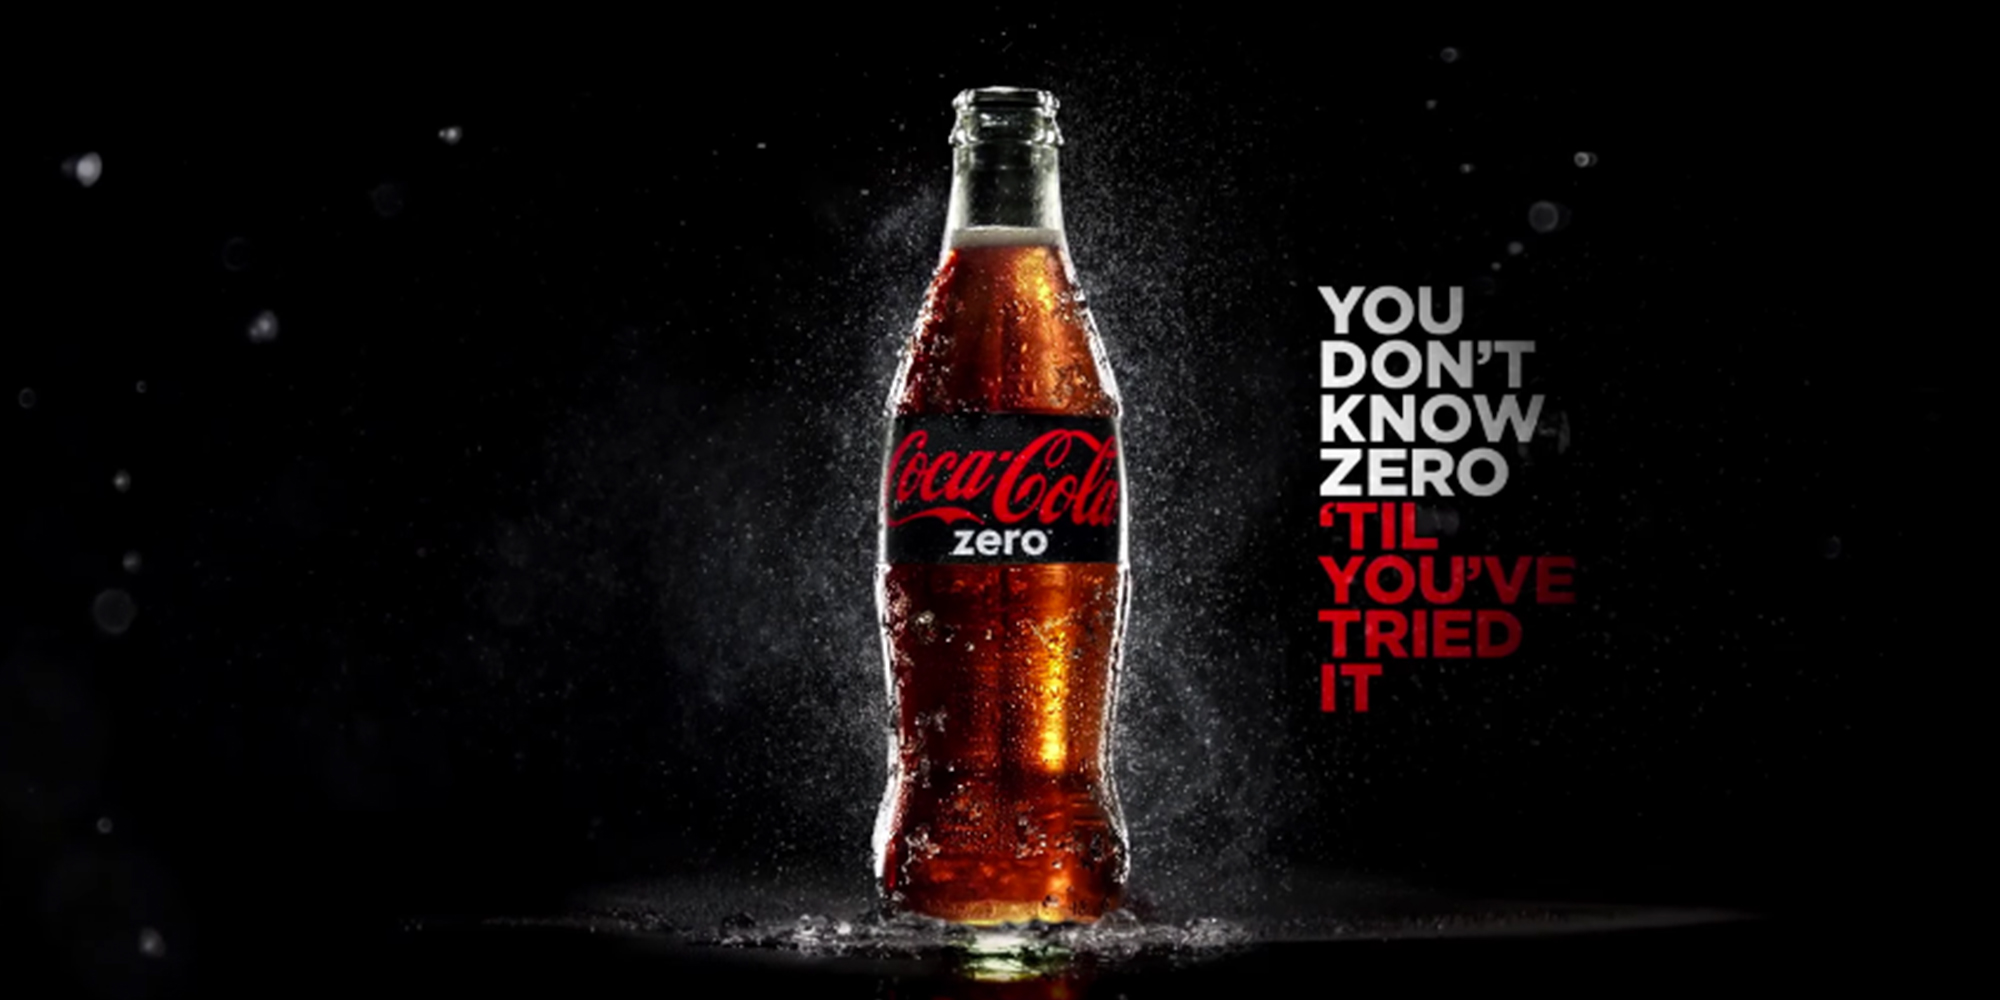 It goes like speed up. Coca Cola Zero реклама. Кола Зеро реклама. Кока кола реклама. Реклама Кока колы Зеро.